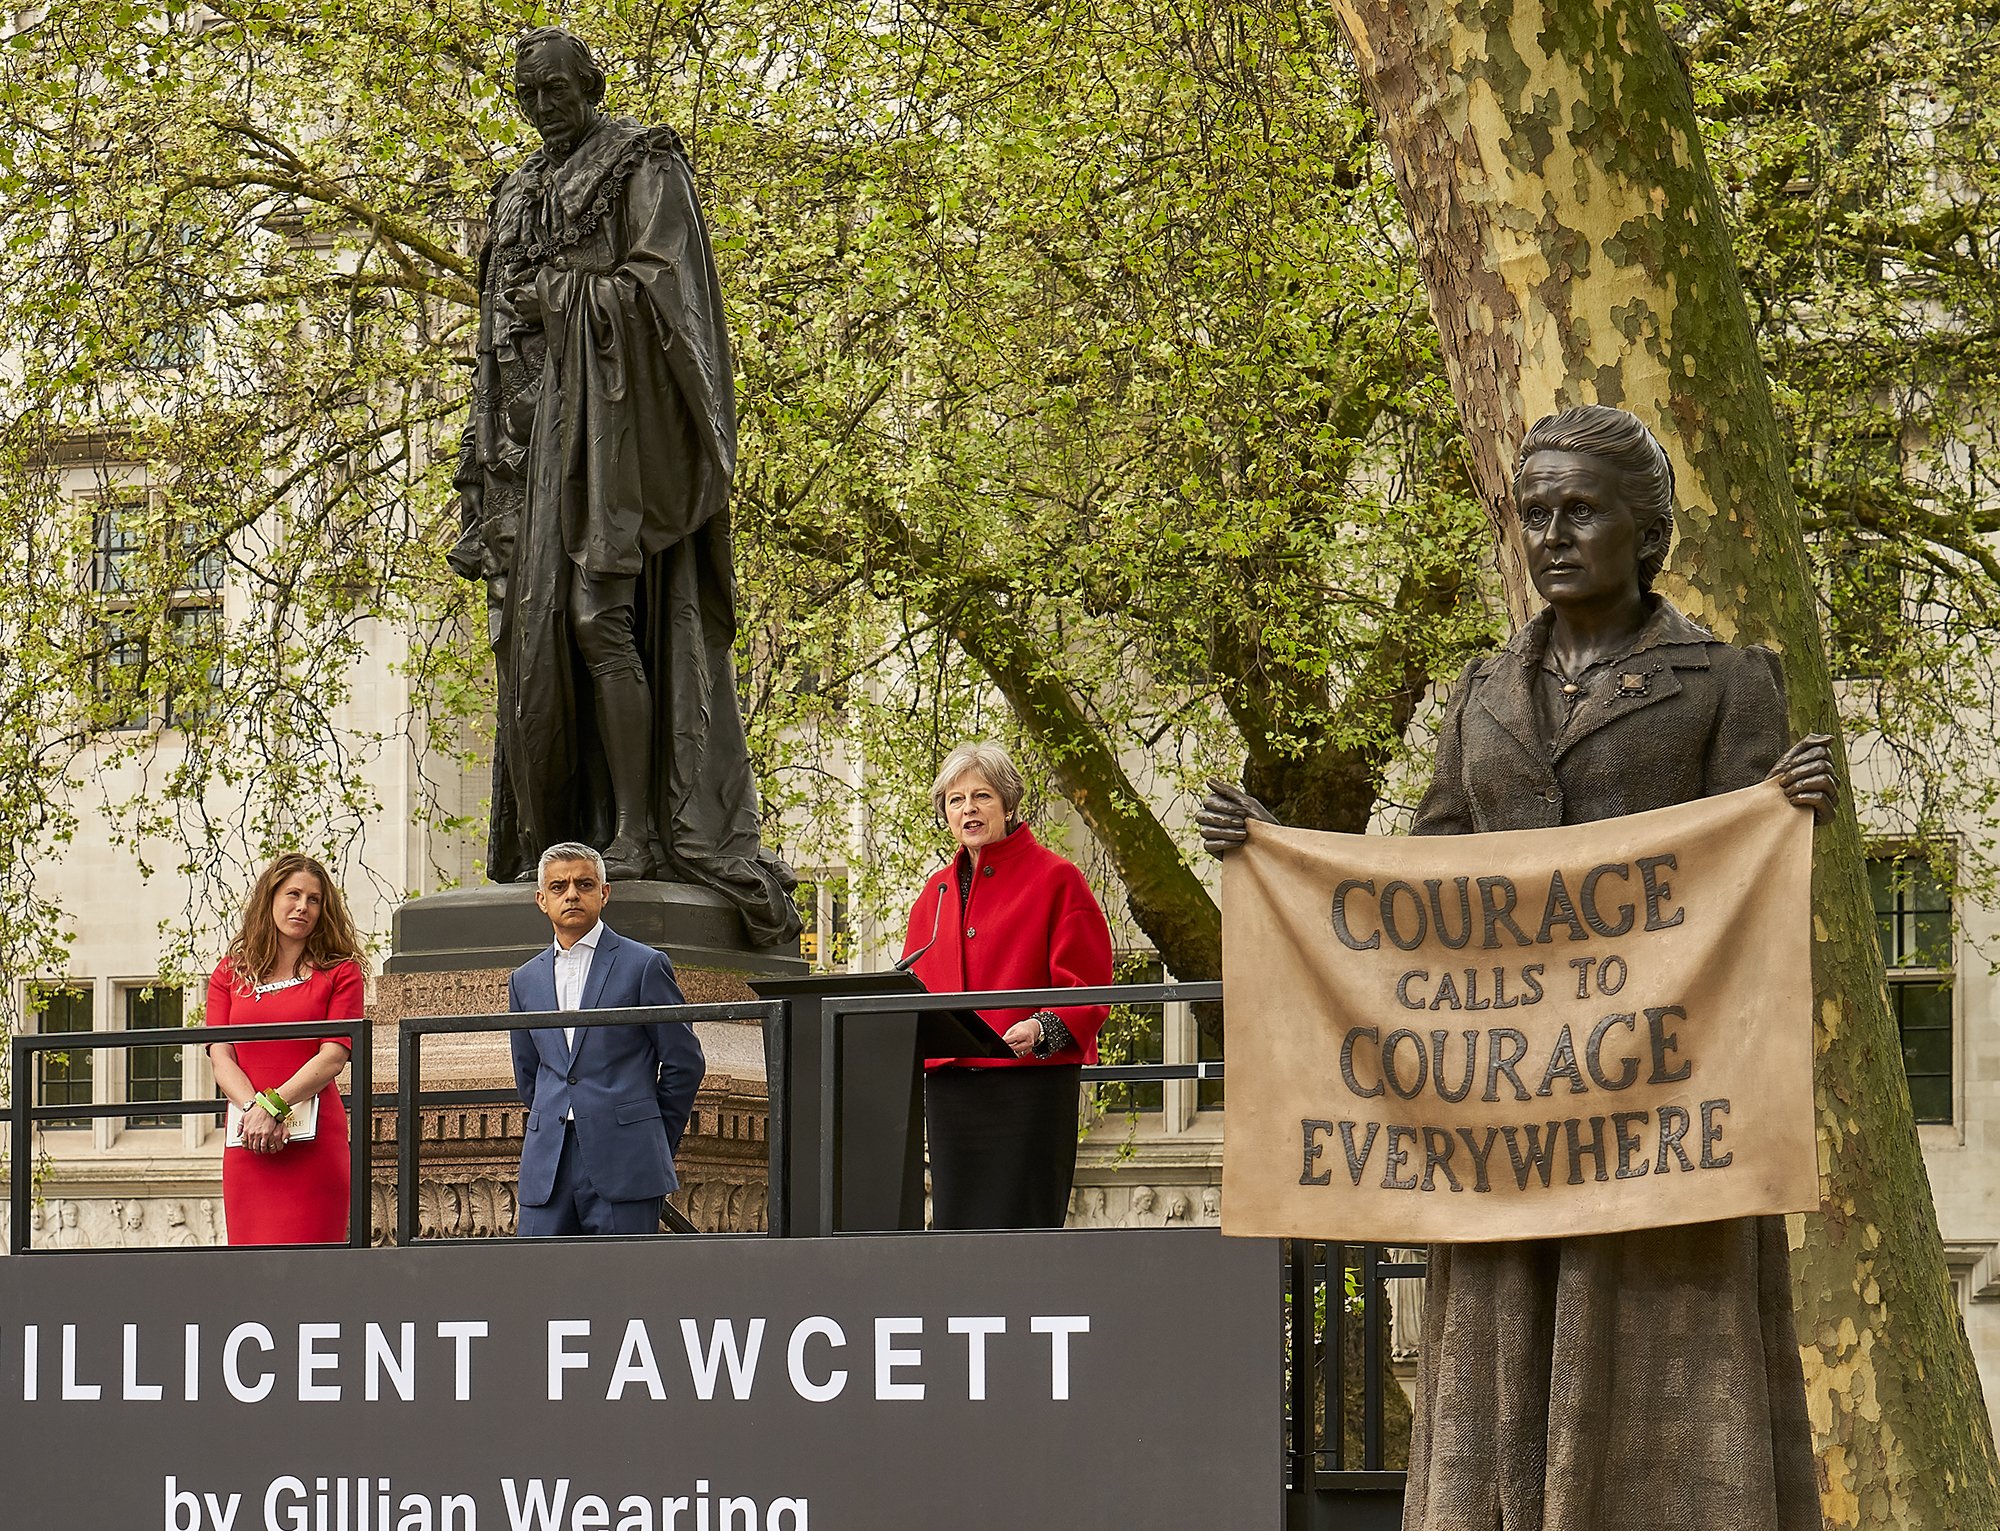 Women’s Suffrage memorial unveils at Parliament Square